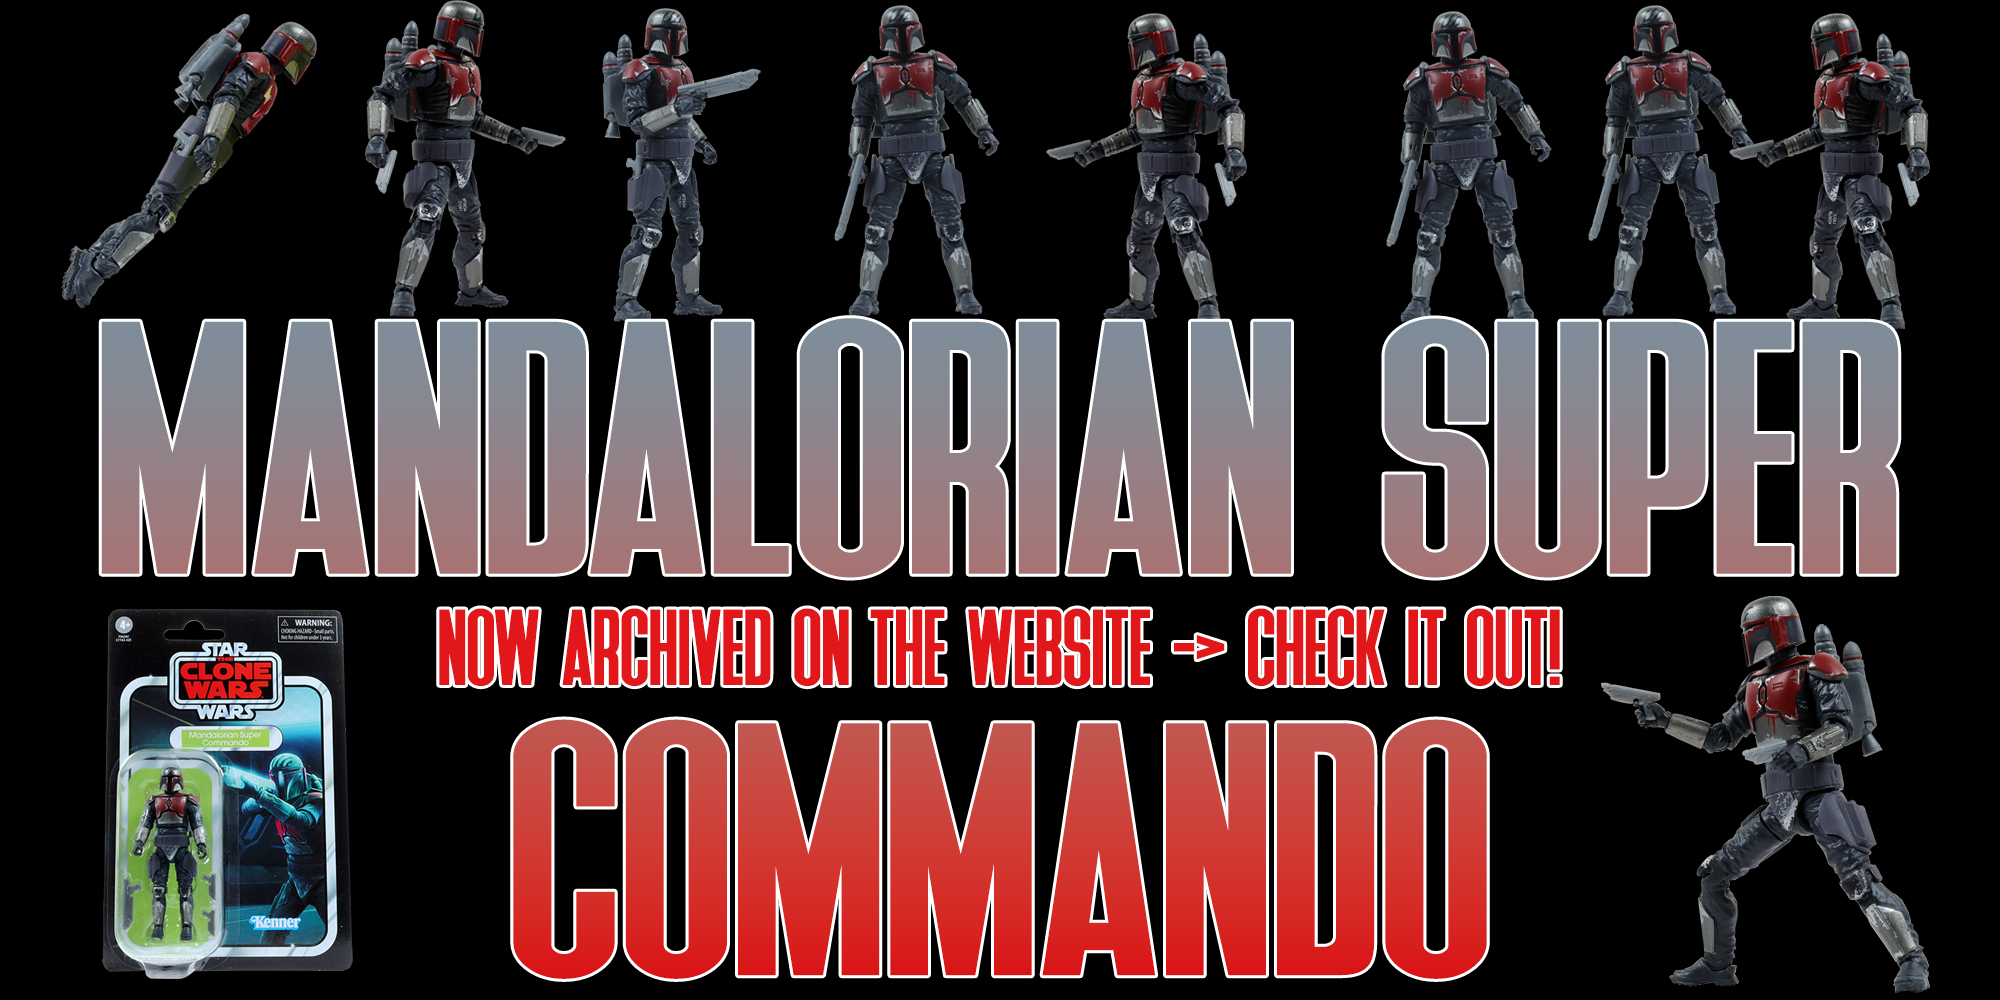 Mandalorian Super Commando VC243 Added